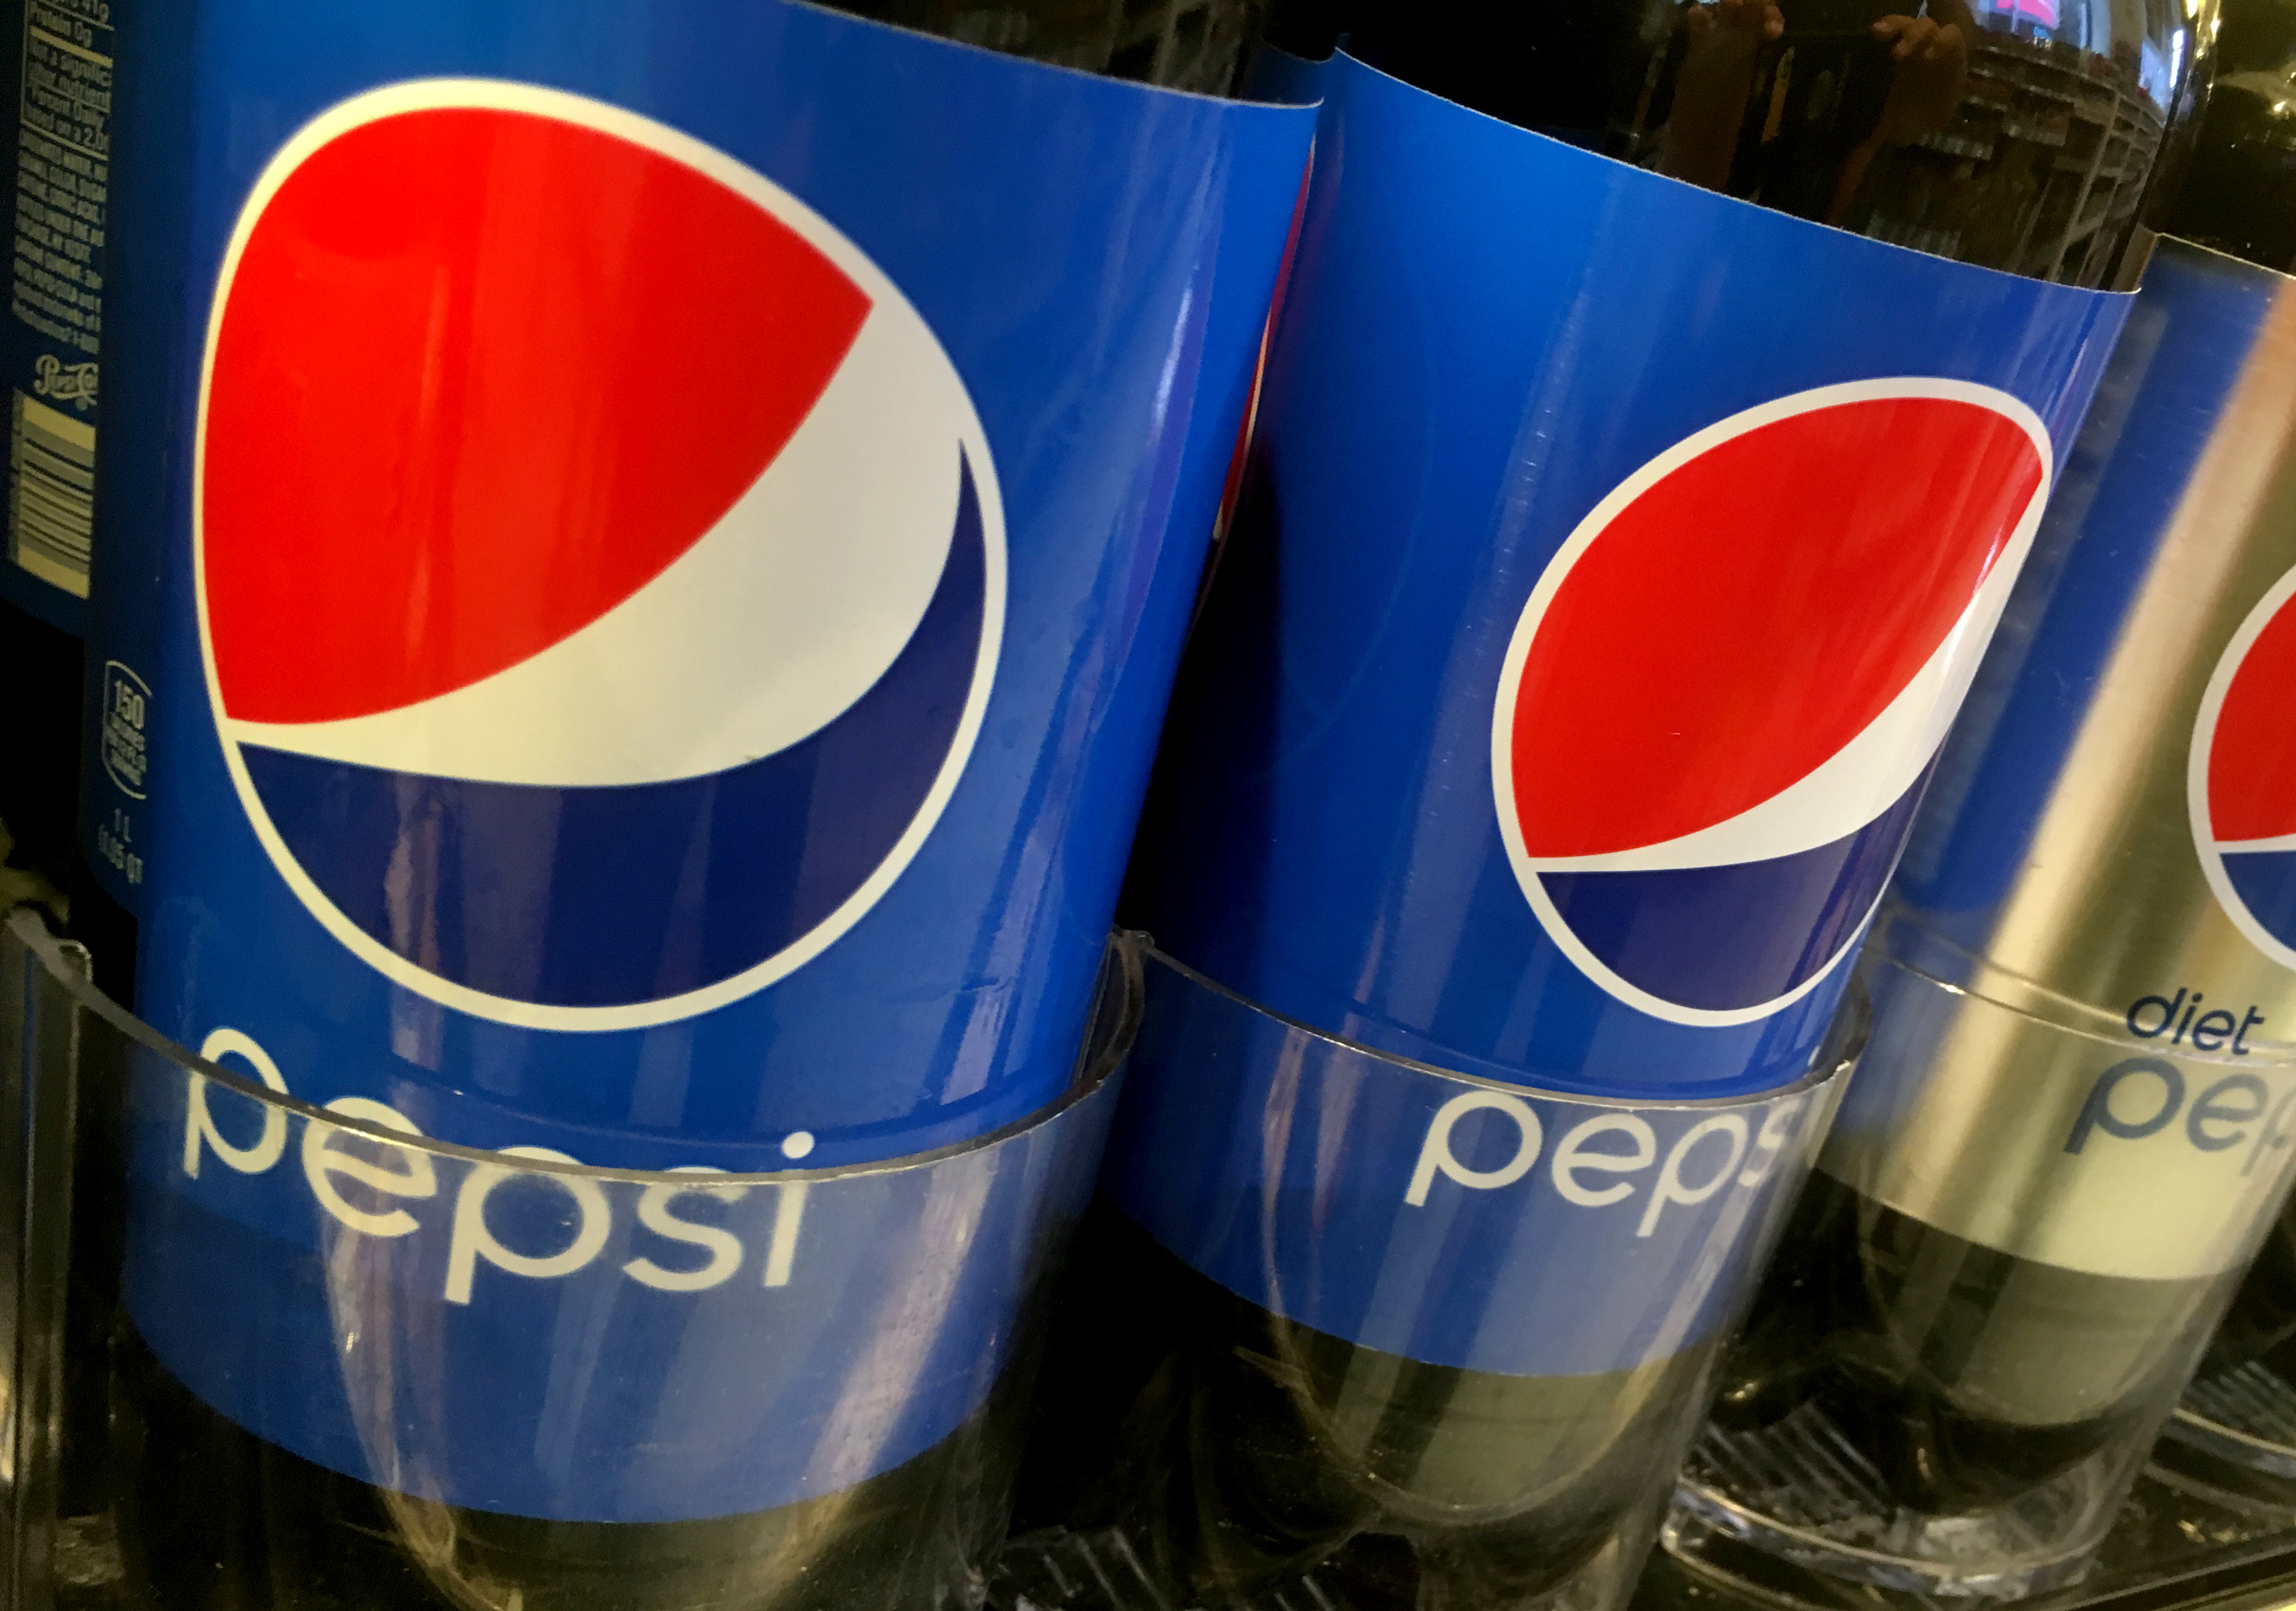 New York sues PepsiCo over plastics it says pollute, hurt health | Reuters